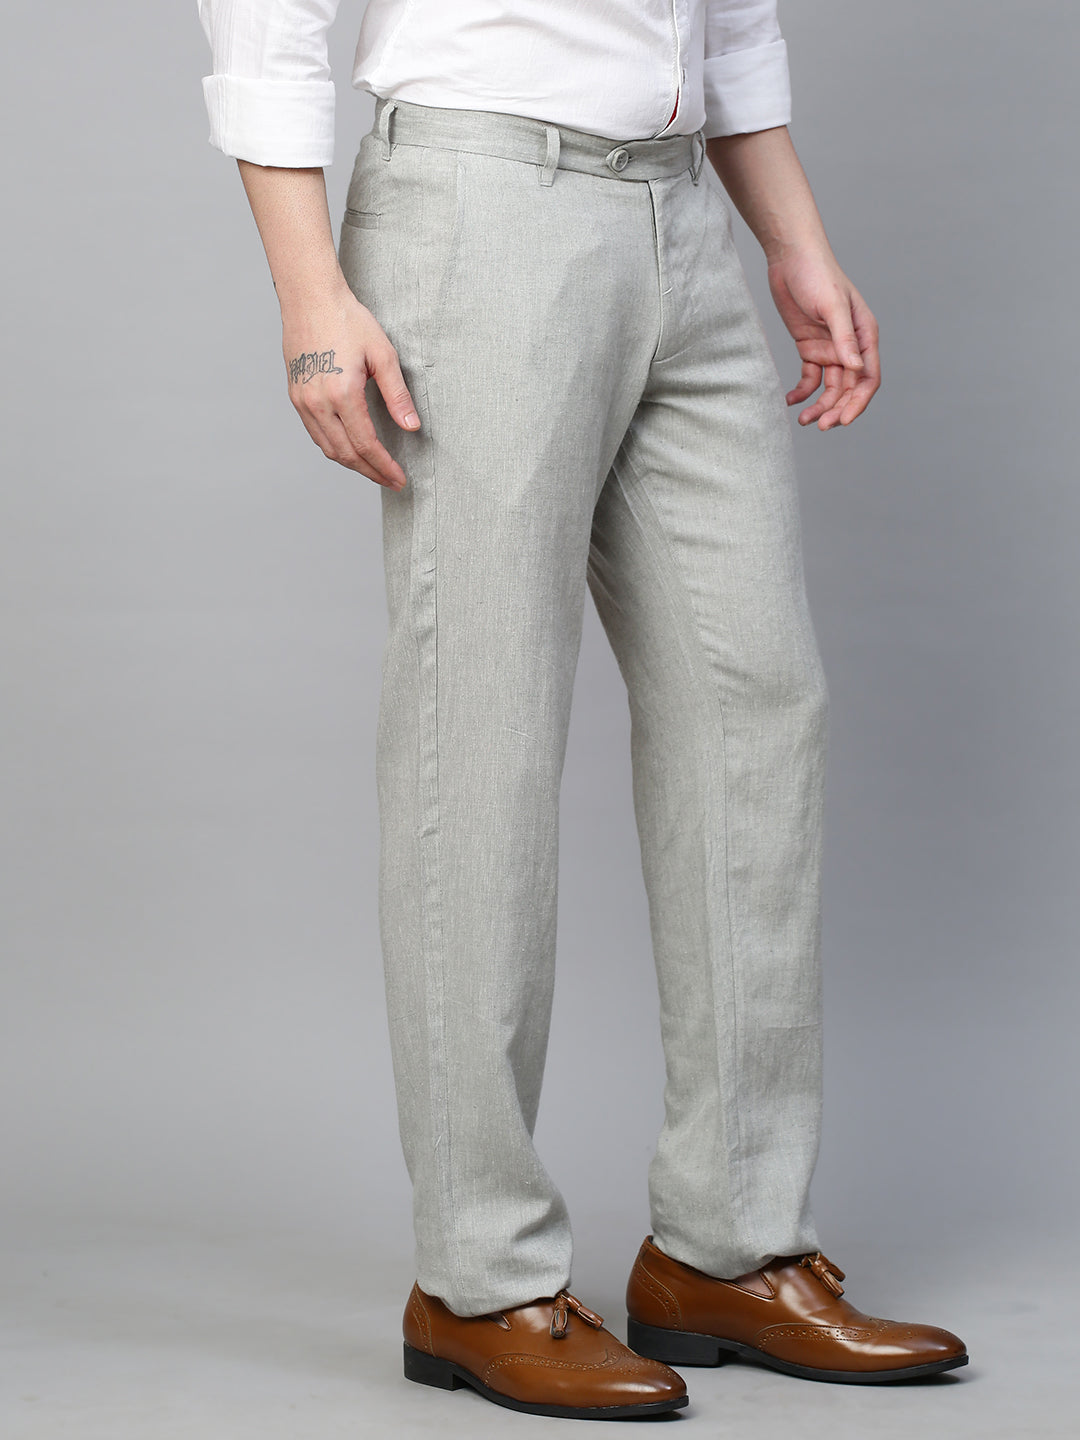 Buy Men's Viscose Linen Casual Wear Regular Fit Pants|Cottonworld